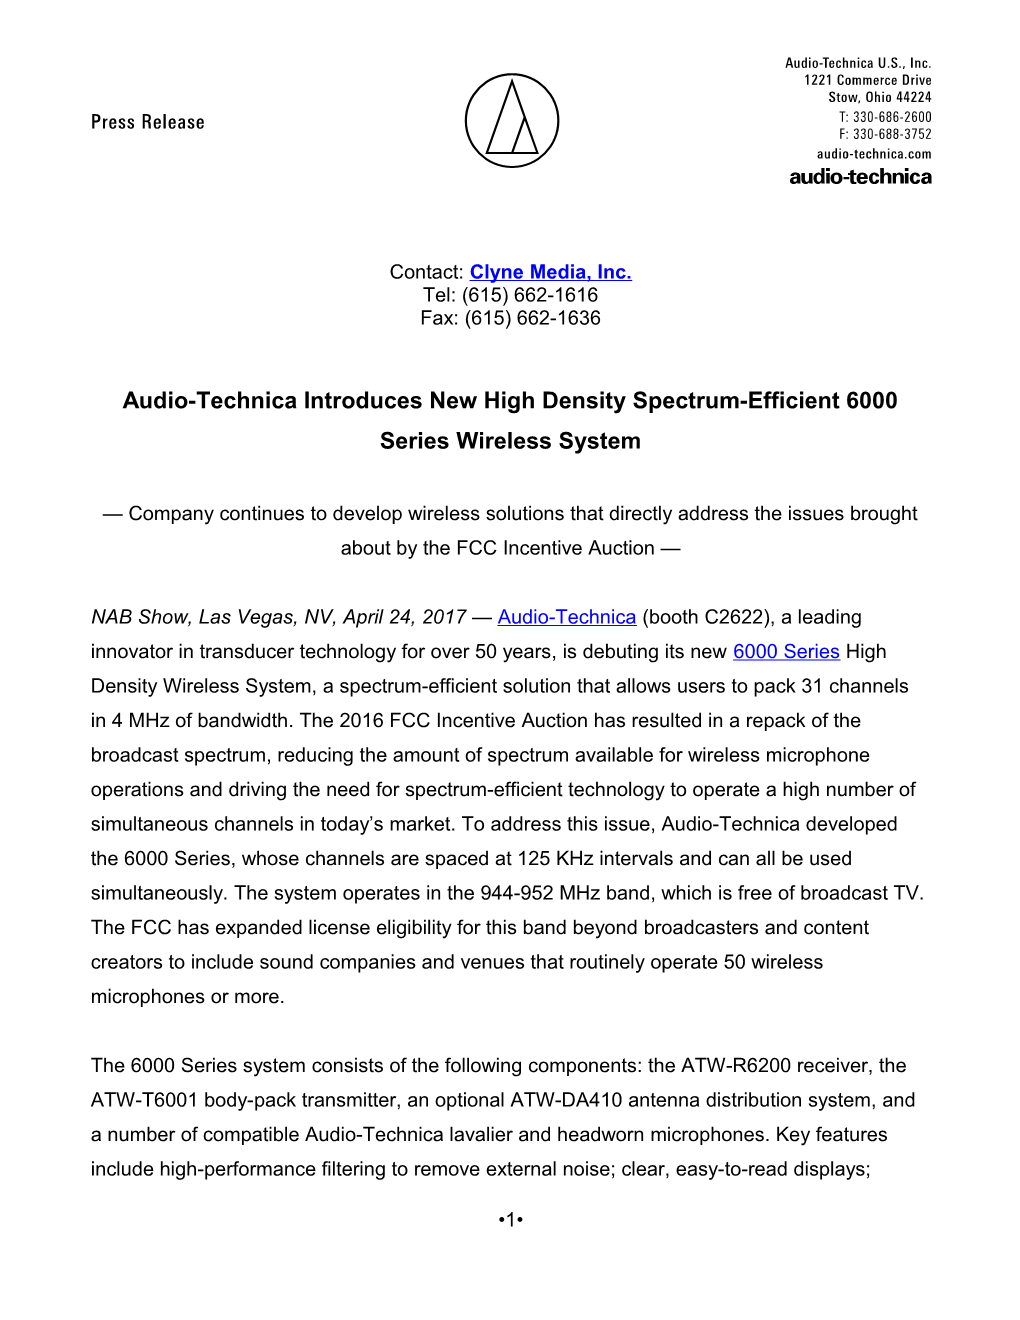 Audio-Technica Introduces New High Density Spectrum-Efficient 6000 Series Wireless System